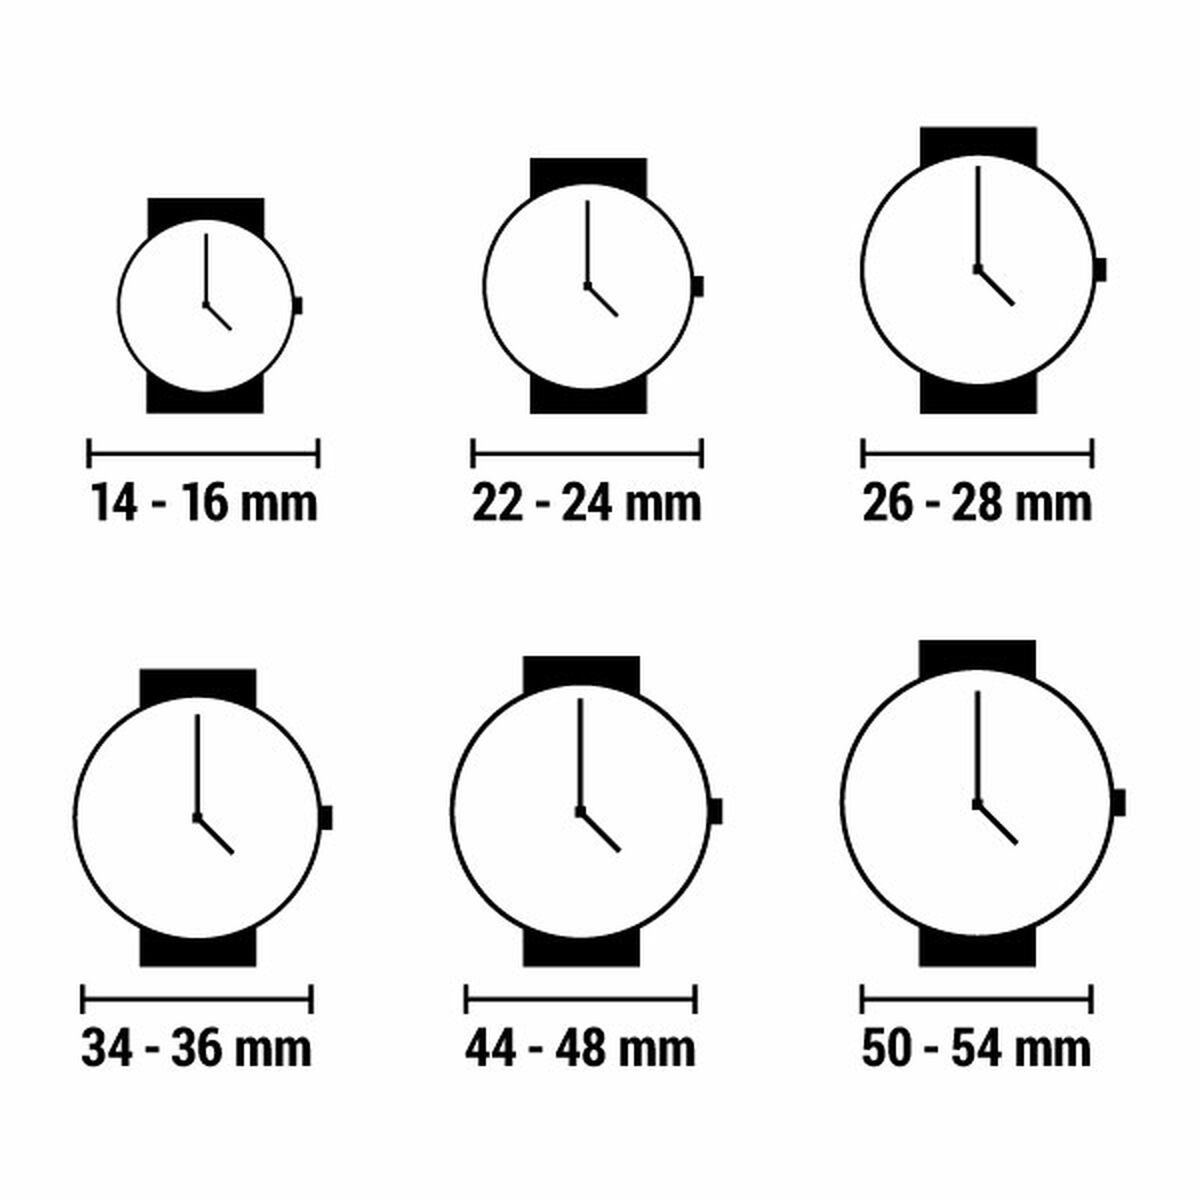 Horloge Dames Mark Maddox MM7102-17 (Ø 33 mm)